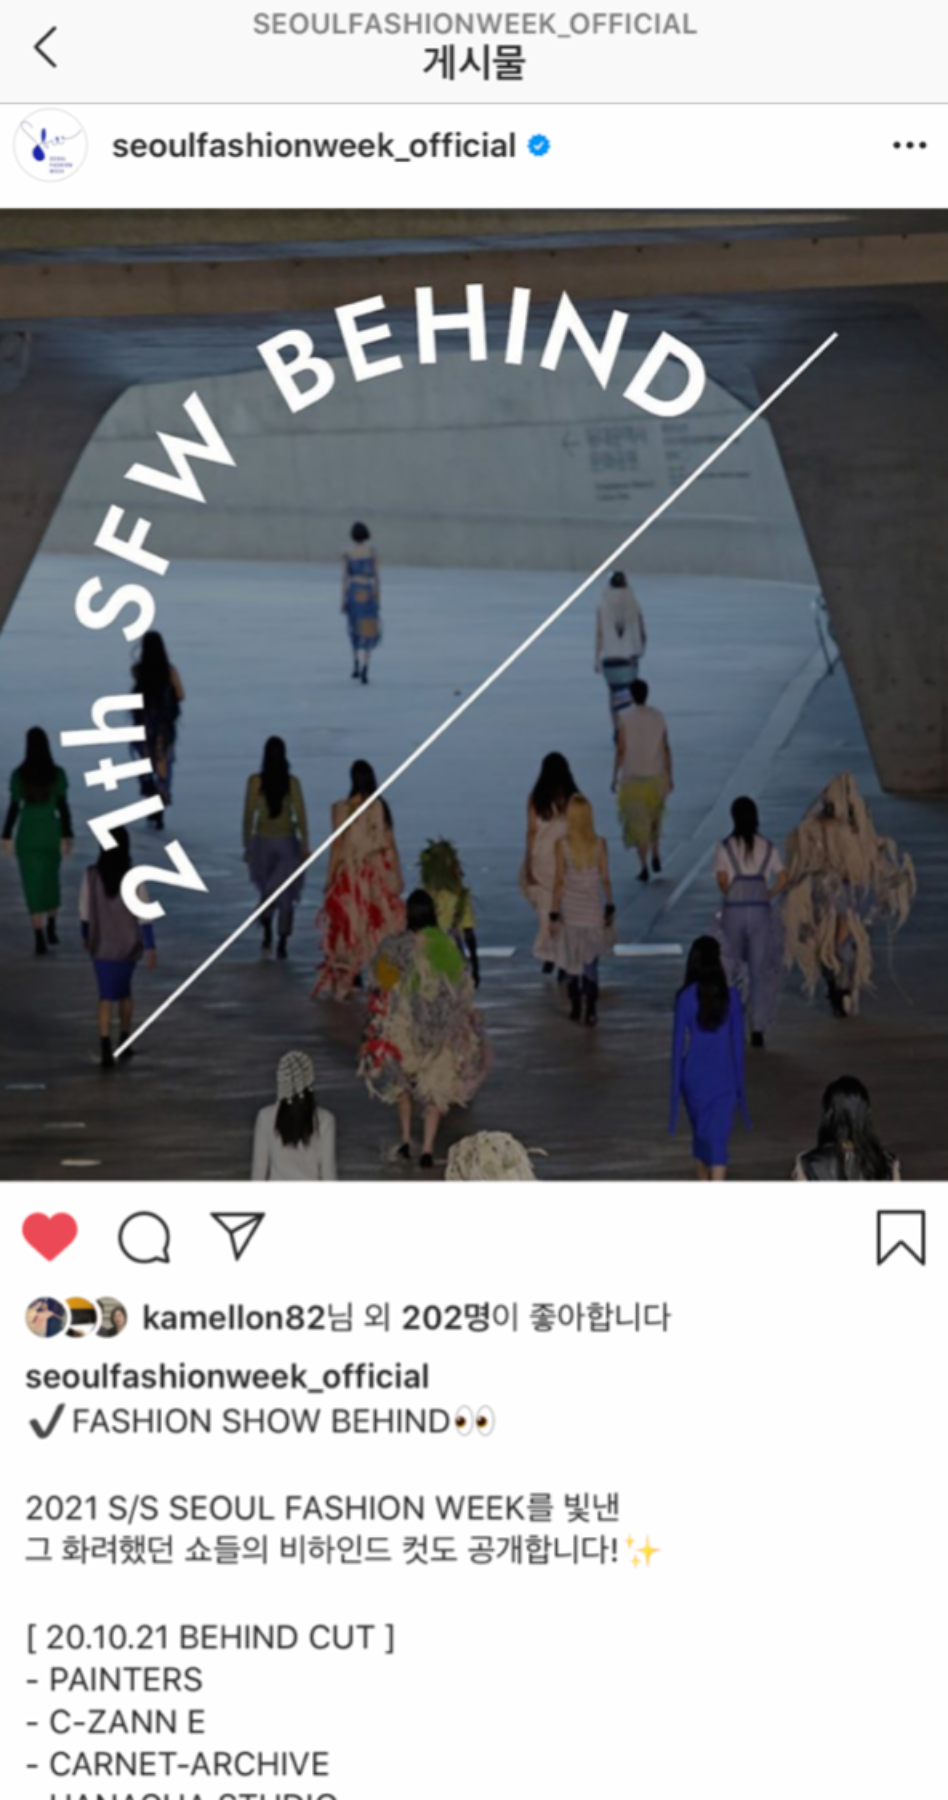 October 2020 @seoulfashionweek_official